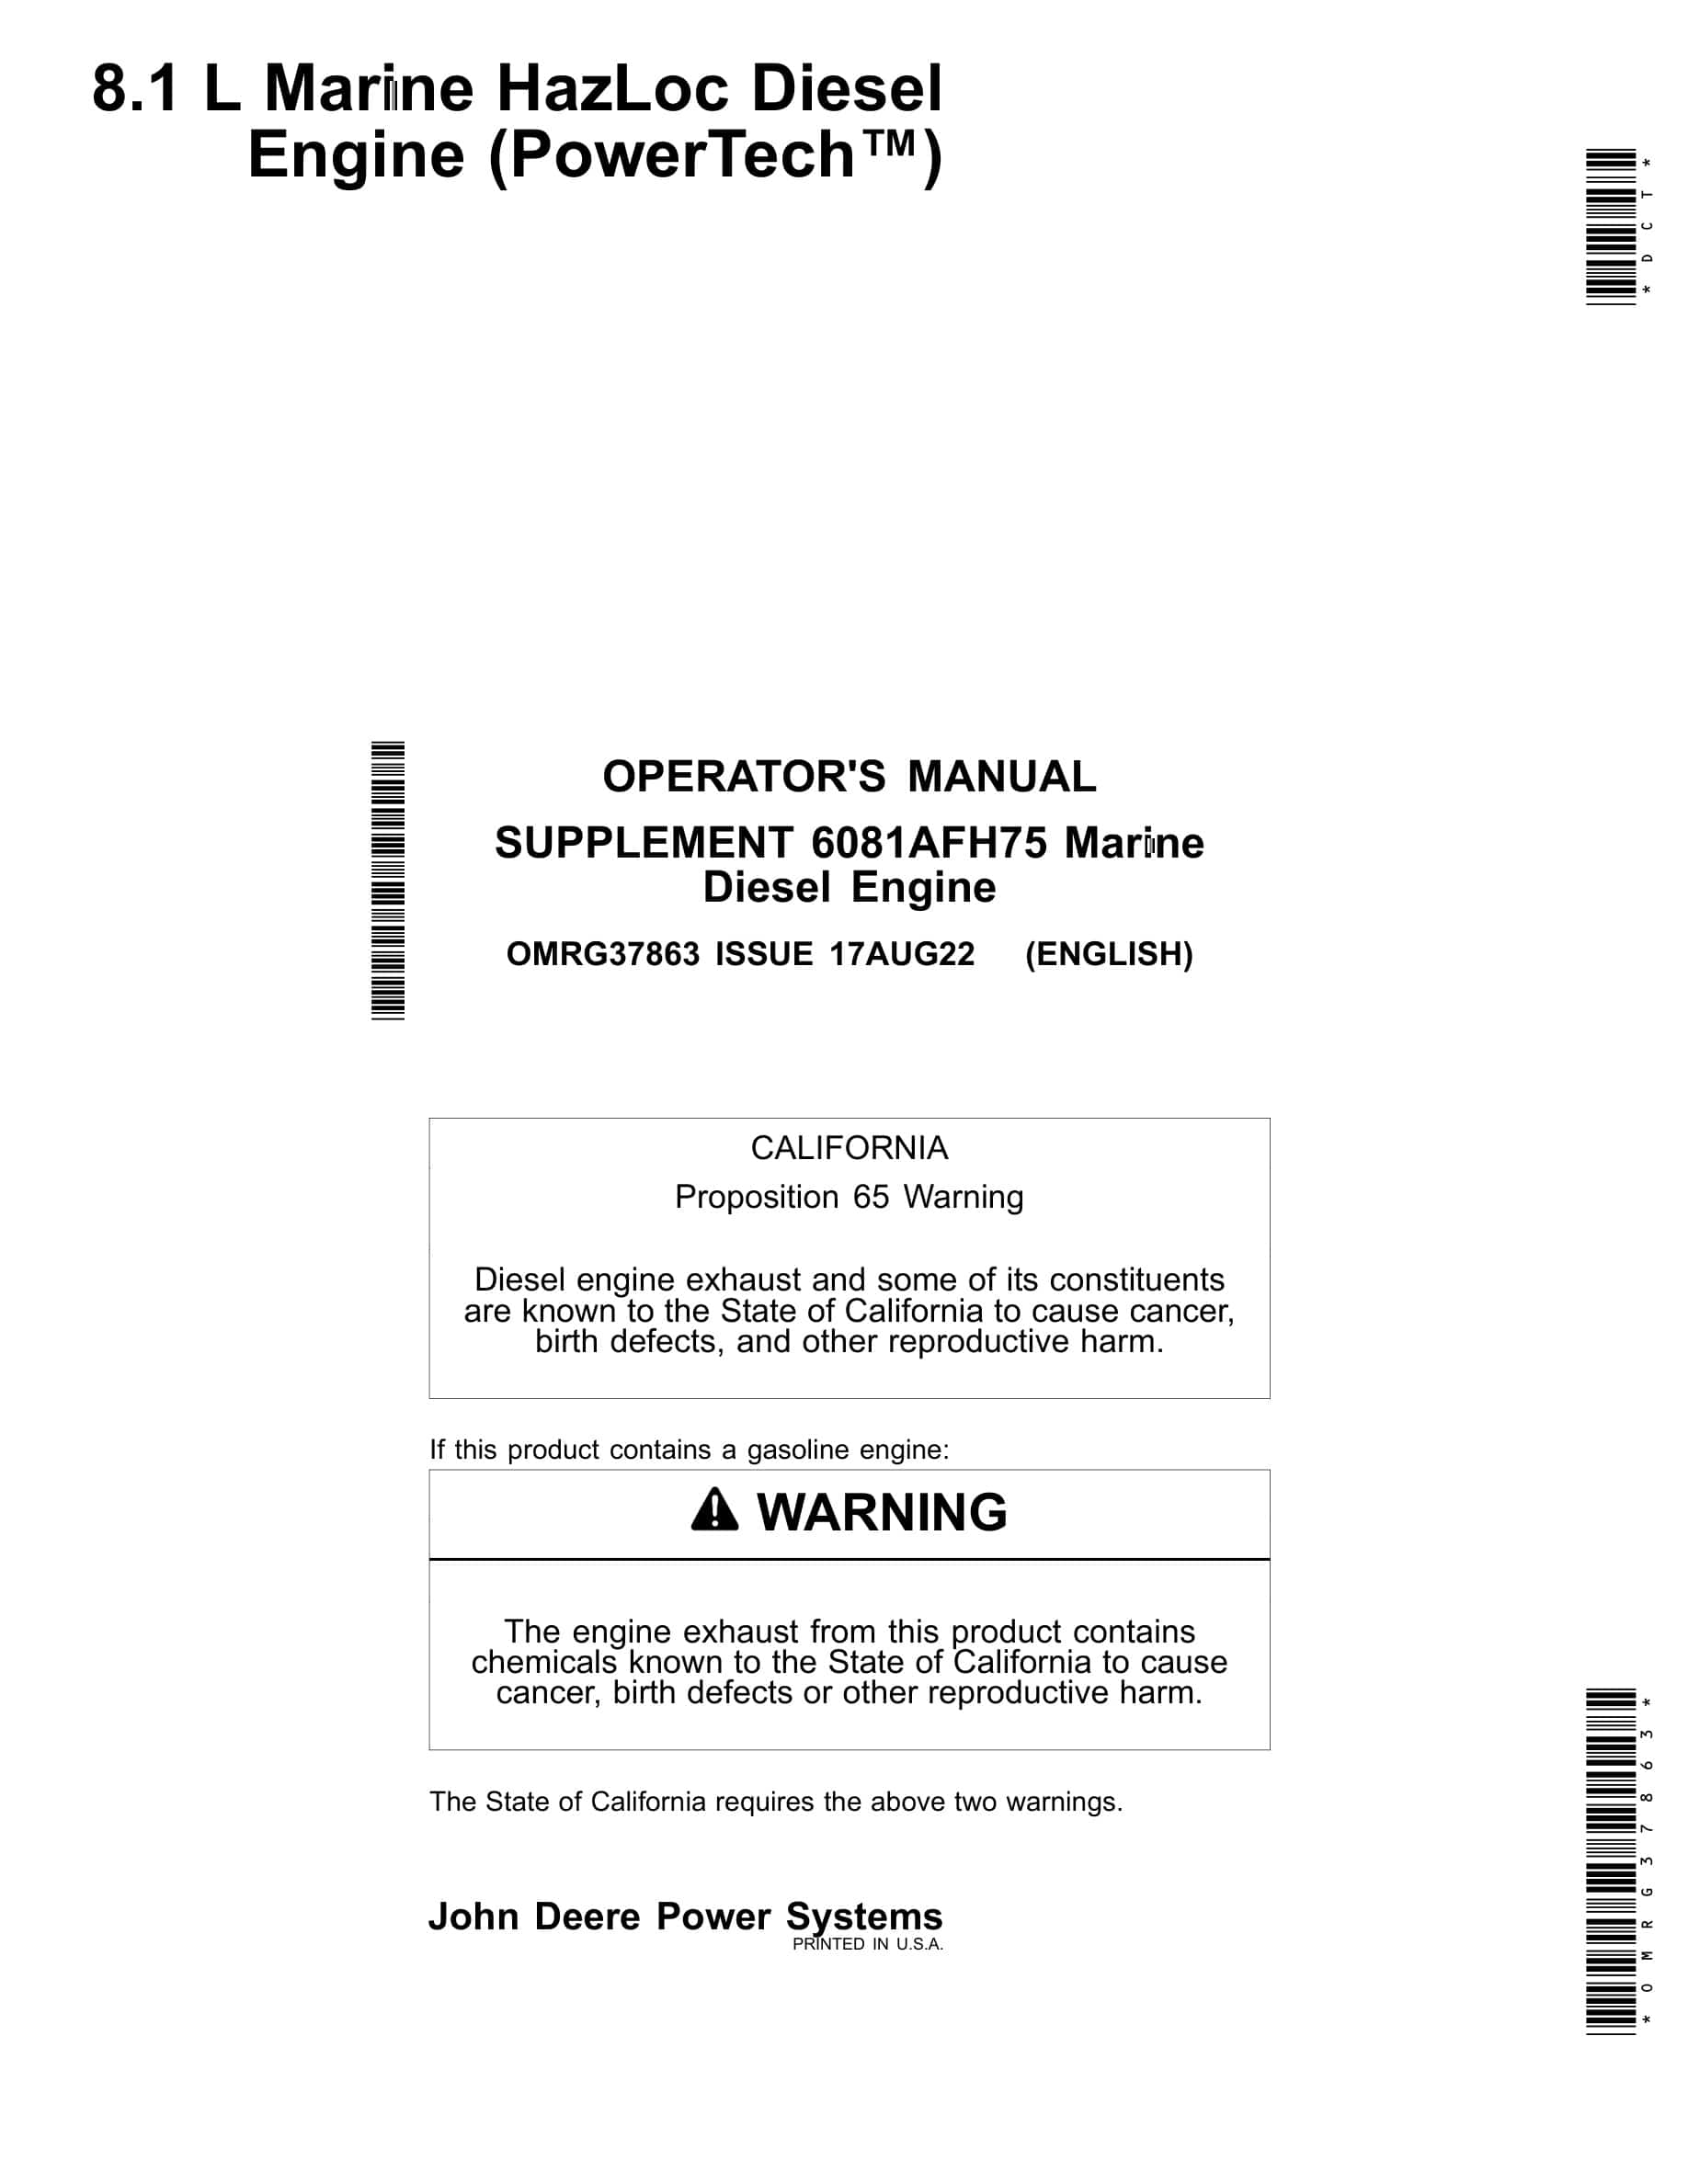 John Deere PowerTech 8.1 L SUPPLEMENT 6081AFH75 Marine HazLoc Diesel Engine Operator Manual OMRG37863-1